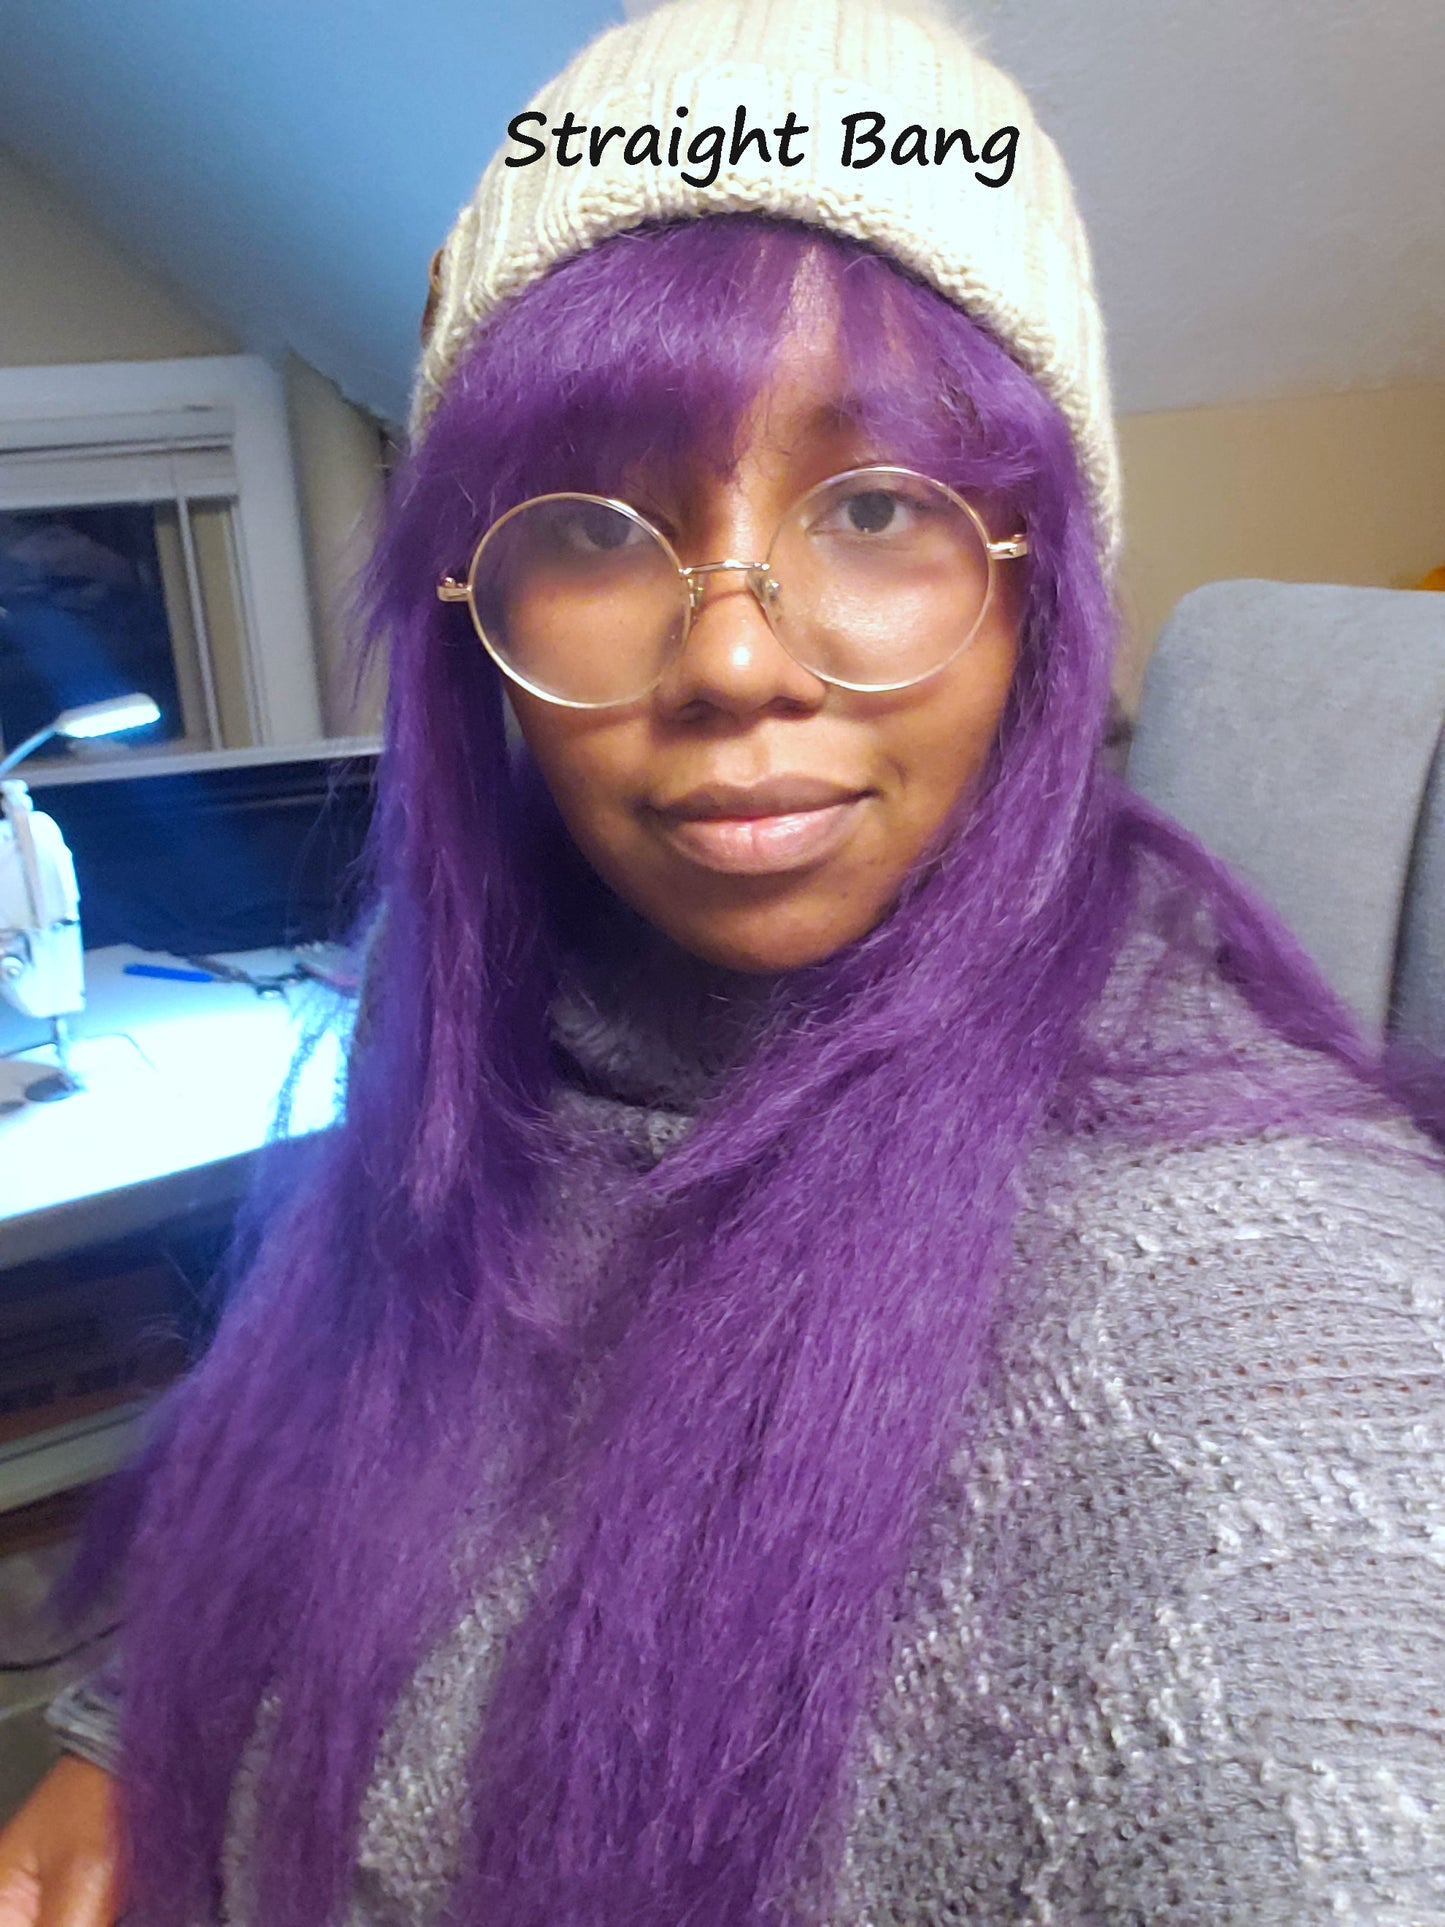 Purple Craze - Hair Only